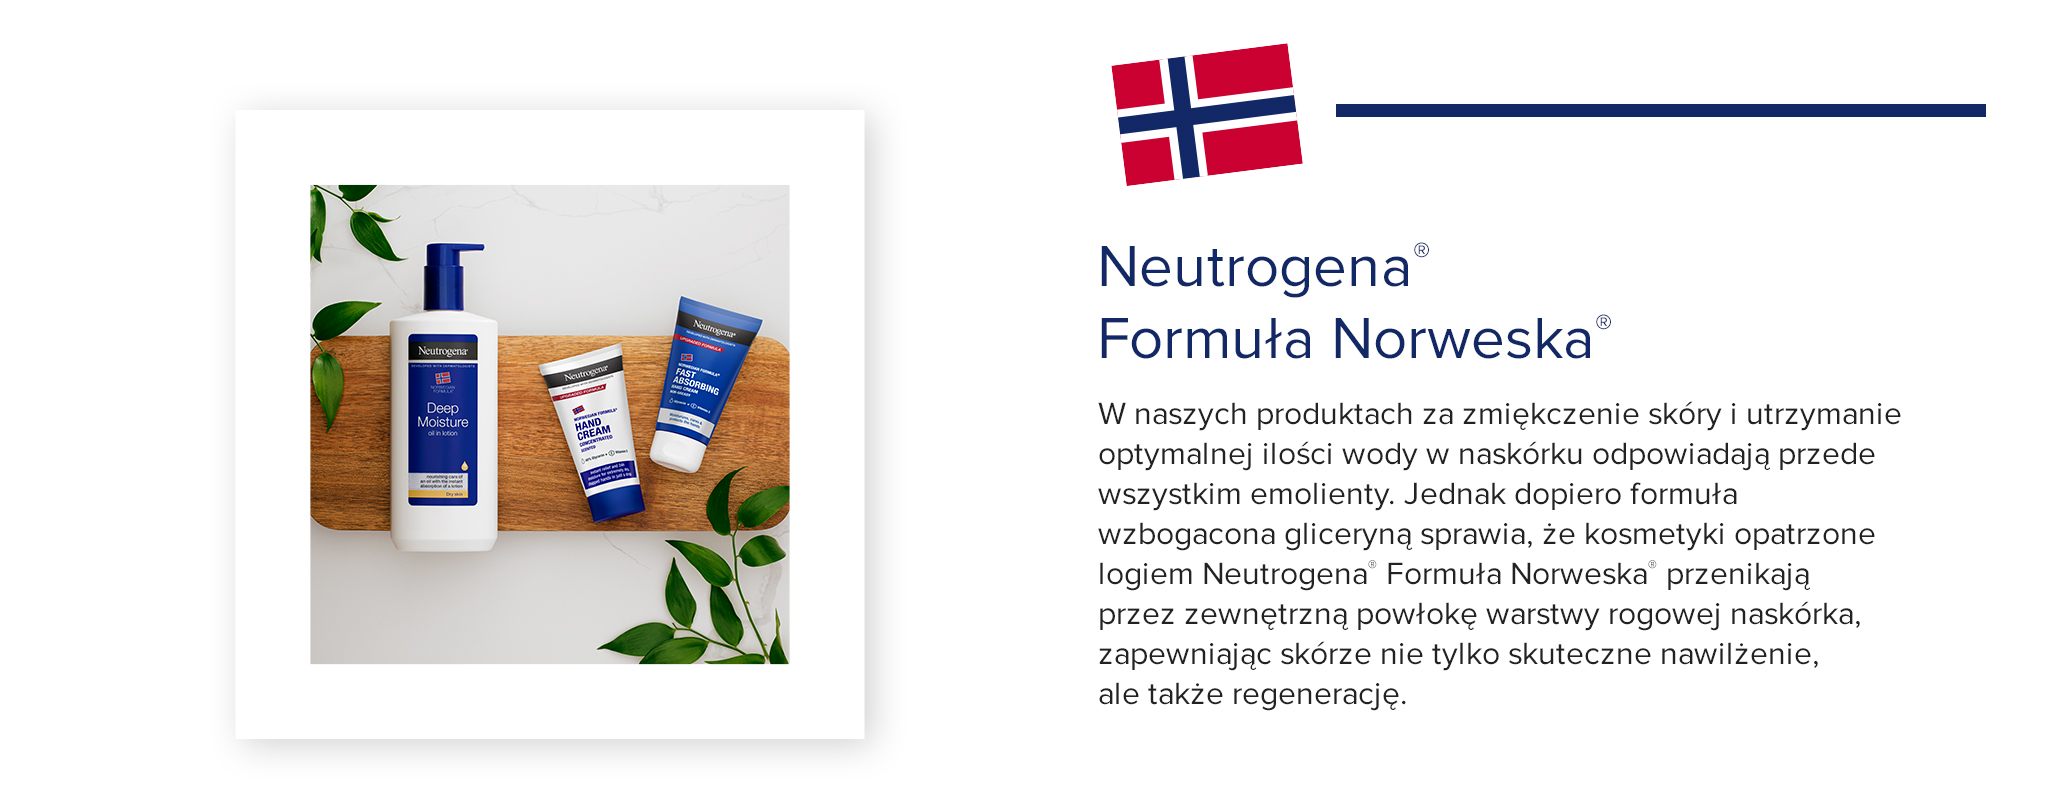 Neutrogena Fast Absorbing Hand Cream